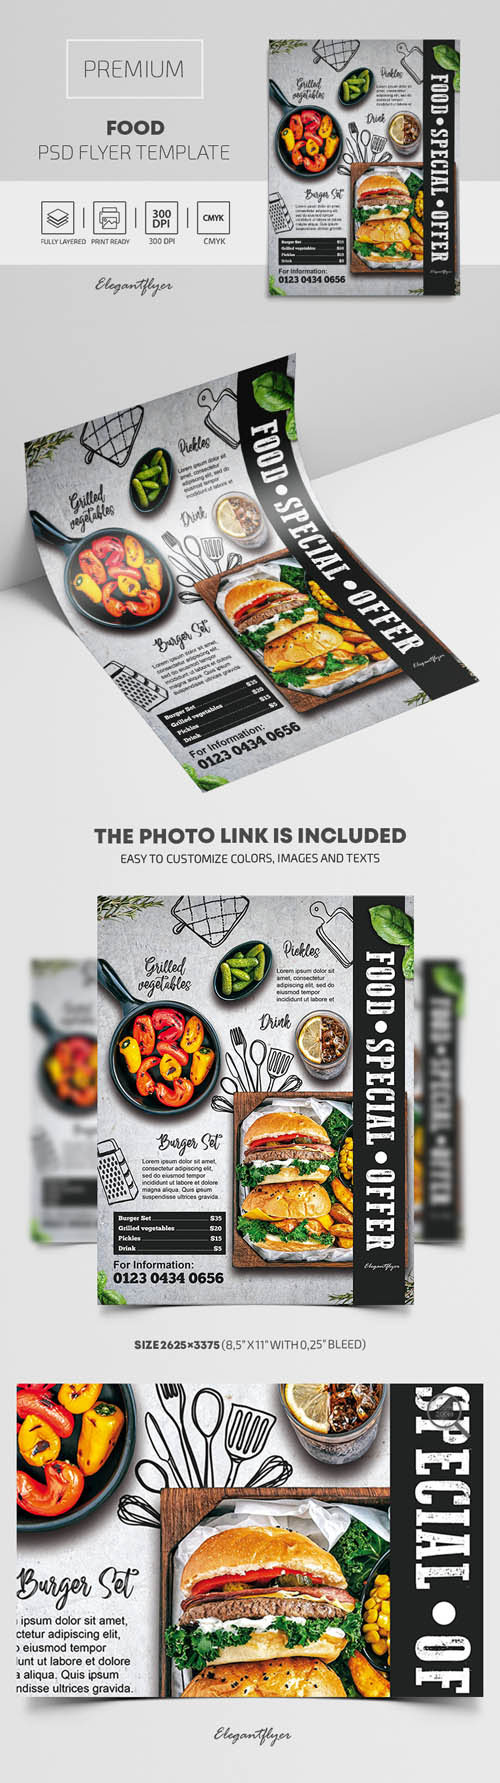 Food Premium PSD Flyer Template vol 2